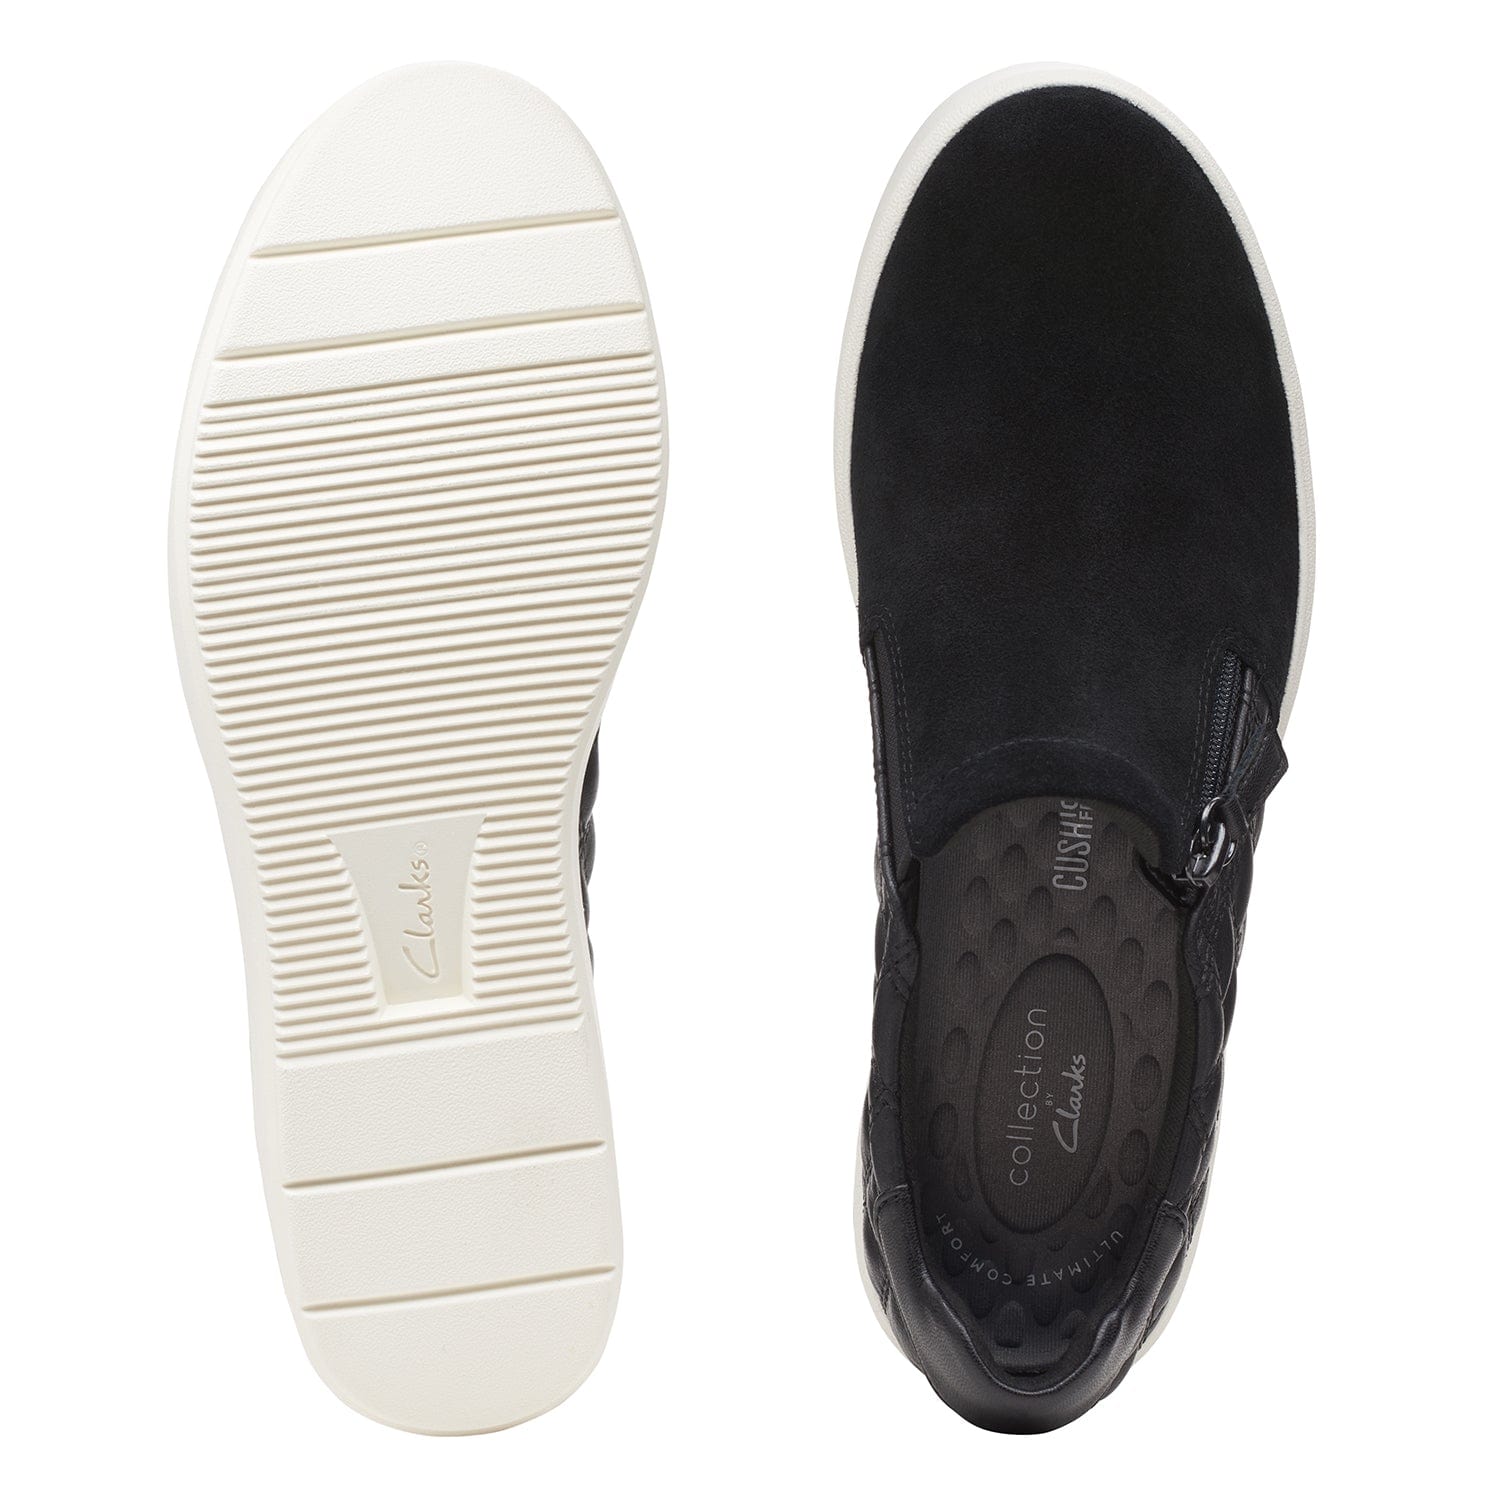 Clarks Layton Step Shoes - Black Combi - 261626254 - D Width (Standard Fit)